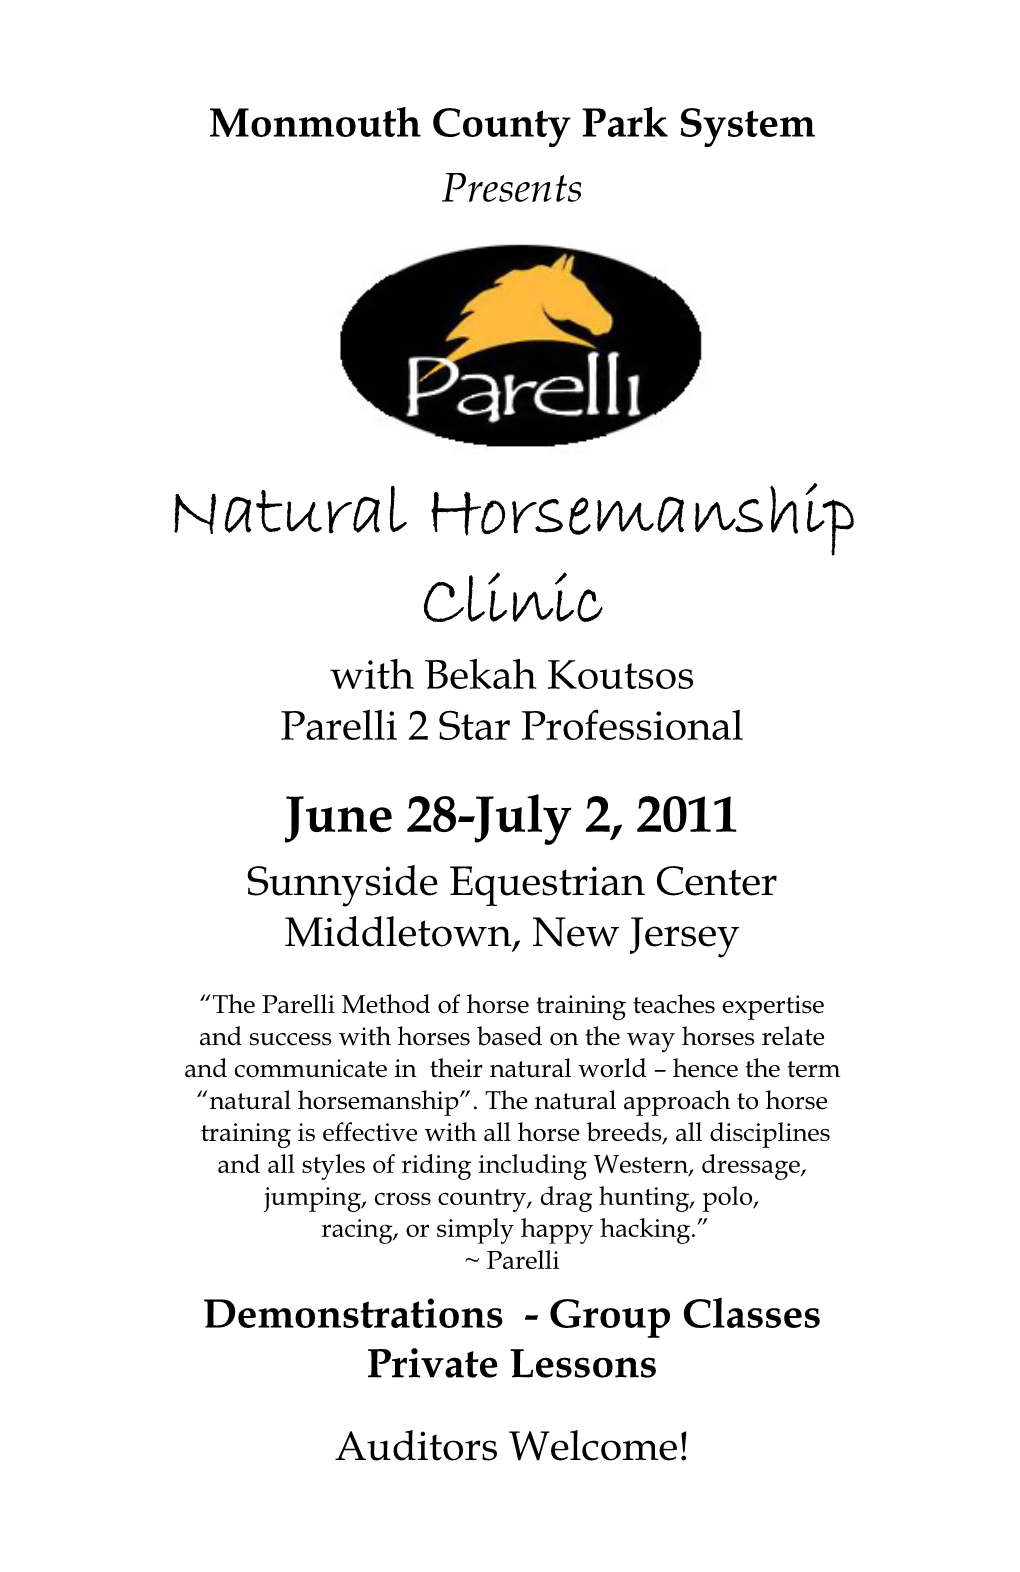 Natural Horsemanship Clinic with Bekah Koutsos Parelli 2 Star Professional